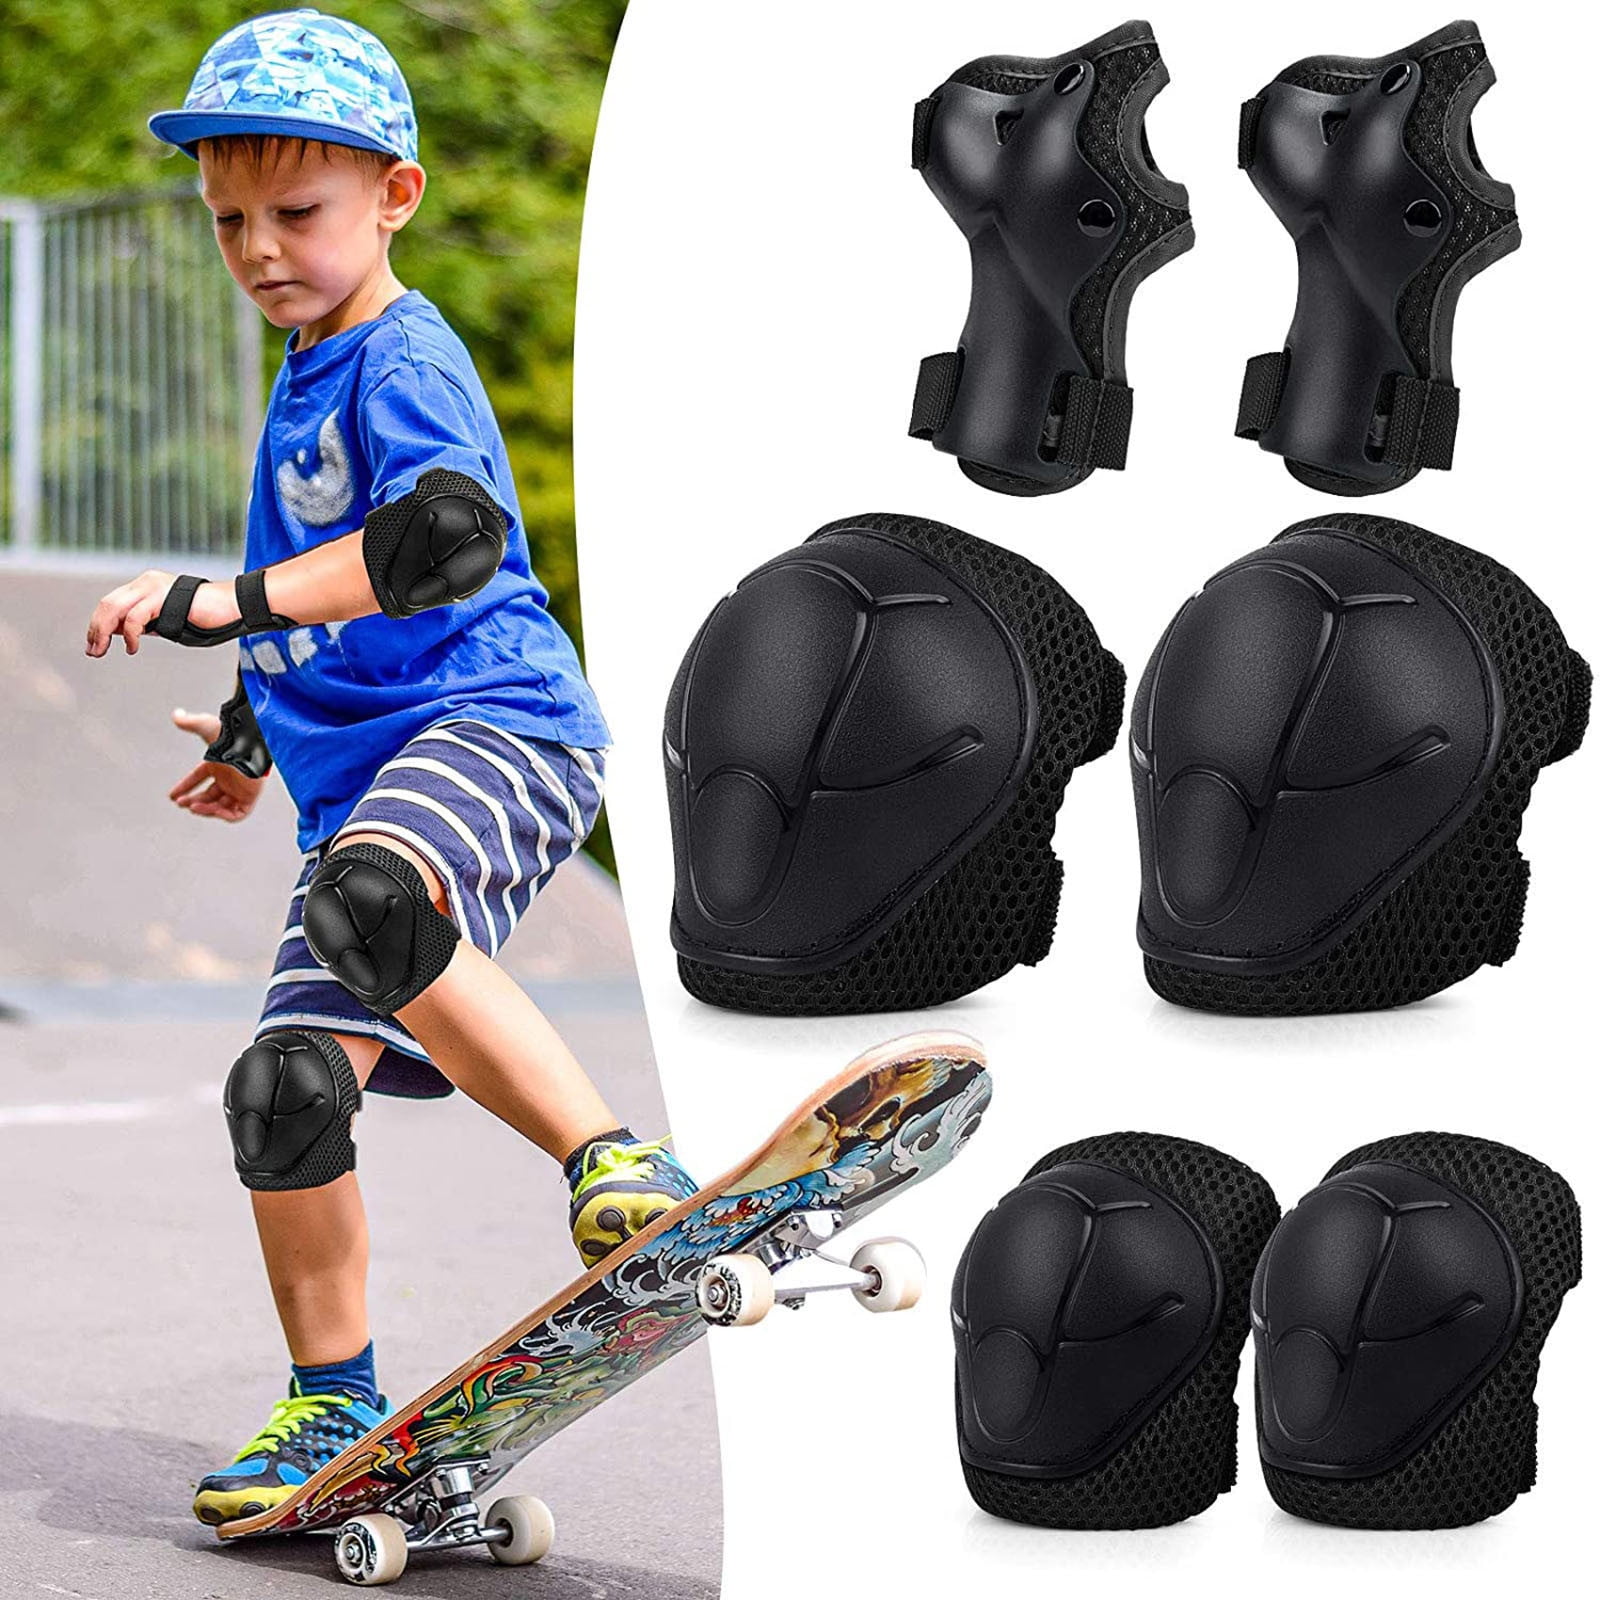 Newest Child Sports Kneecap Knee Pad Protective Anti-Skid Anti-Collision Thickened Sponge for Biking Skating Skateboarding Dancing 